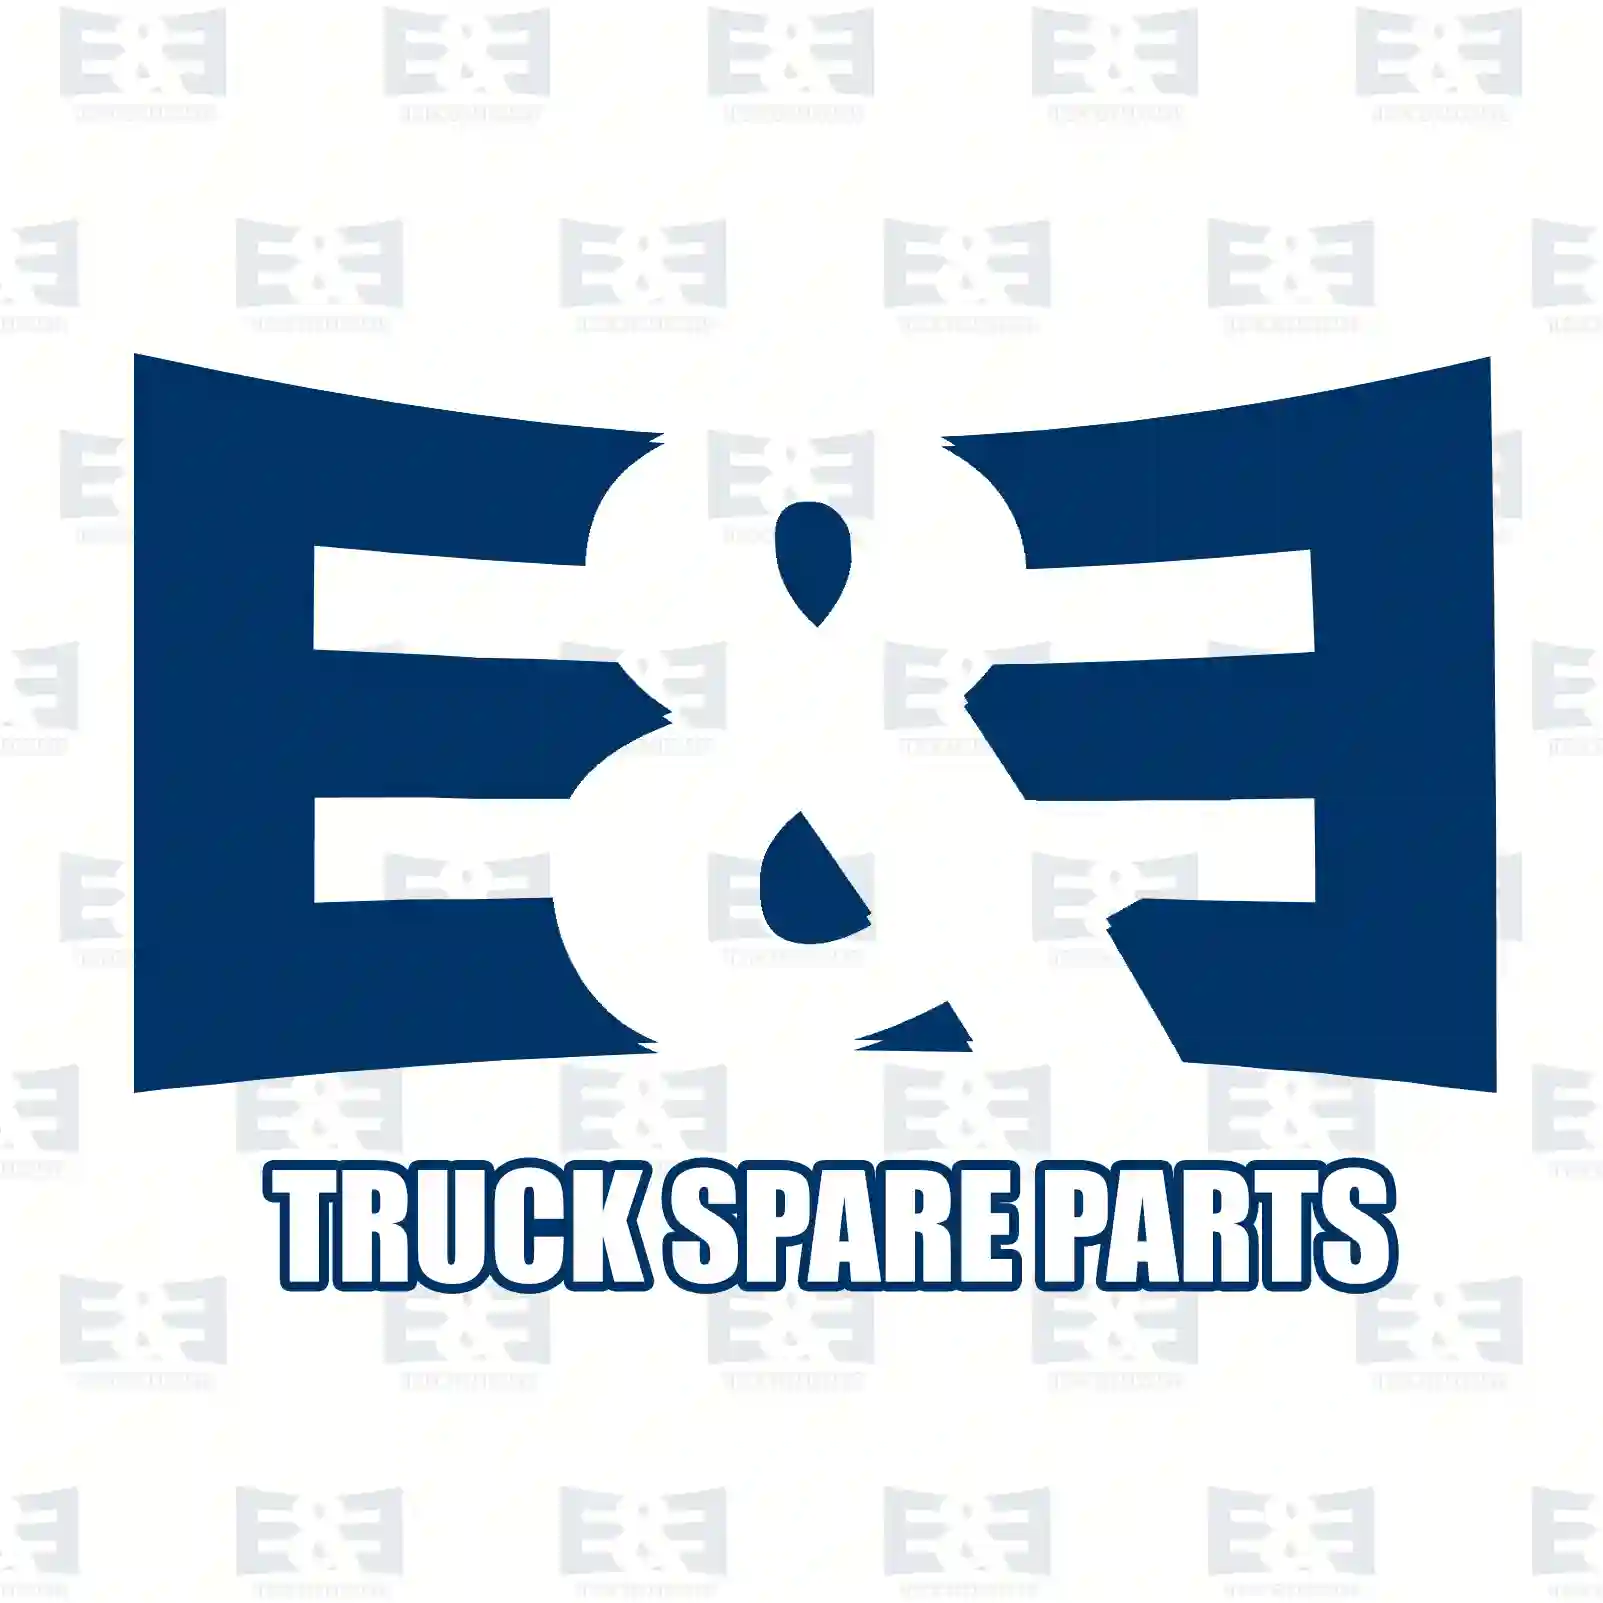 Drum brake lining kit, axle kit - oversize, 2E2294466, 0683036, 0683277, 682422, 682424, 683036, 683277, 683277S ||  2E2294466 E&E Truck Spare Parts | Truck Spare Parts, Auotomotive Spare Parts Drum brake lining kit, axle kit - oversize, 2E2294466, 0683036, 0683277, 682422, 682424, 683036, 683277, 683277S ||  2E2294466 E&E Truck Spare Parts | Truck Spare Parts, Auotomotive Spare Parts